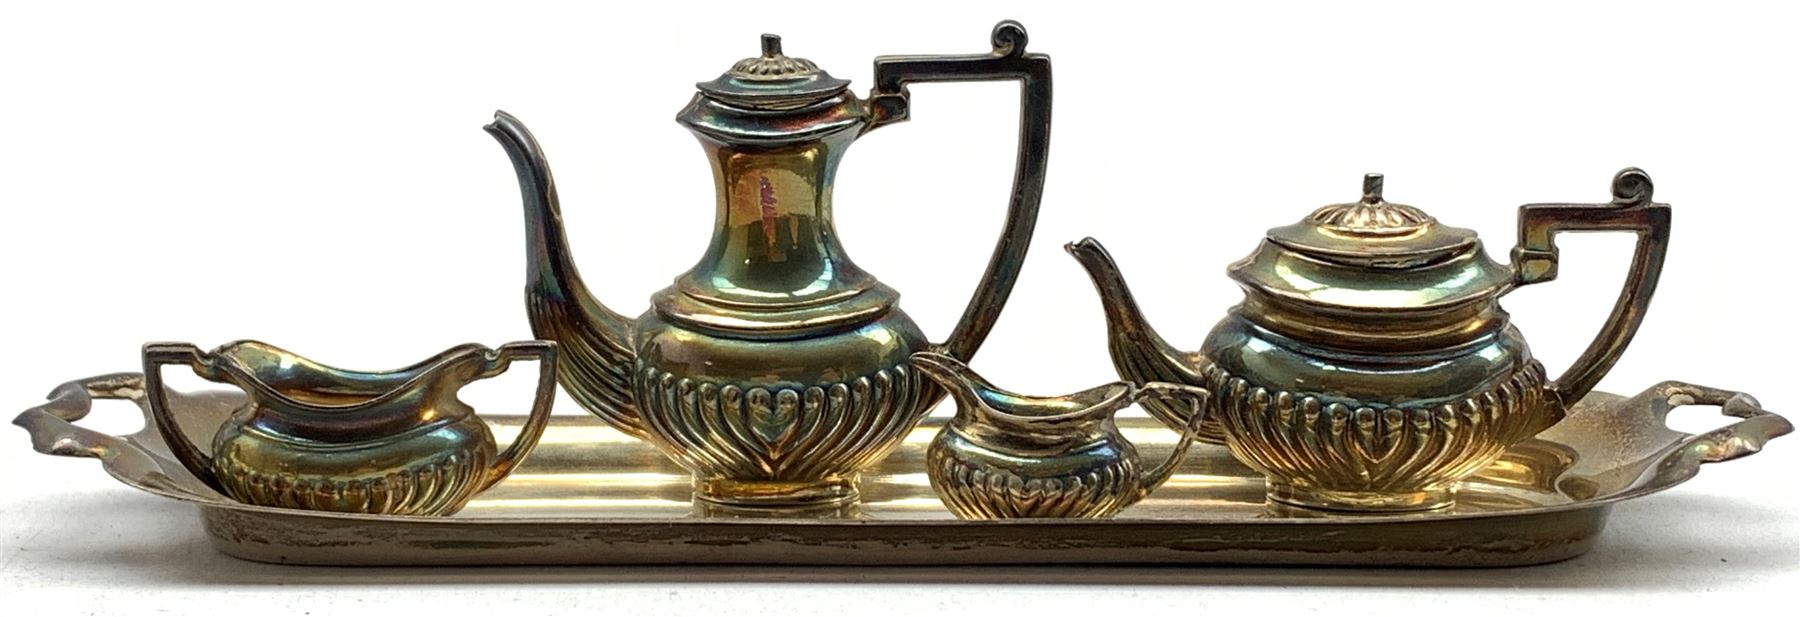 Miniature silver tea and coffee set comprising tea pot